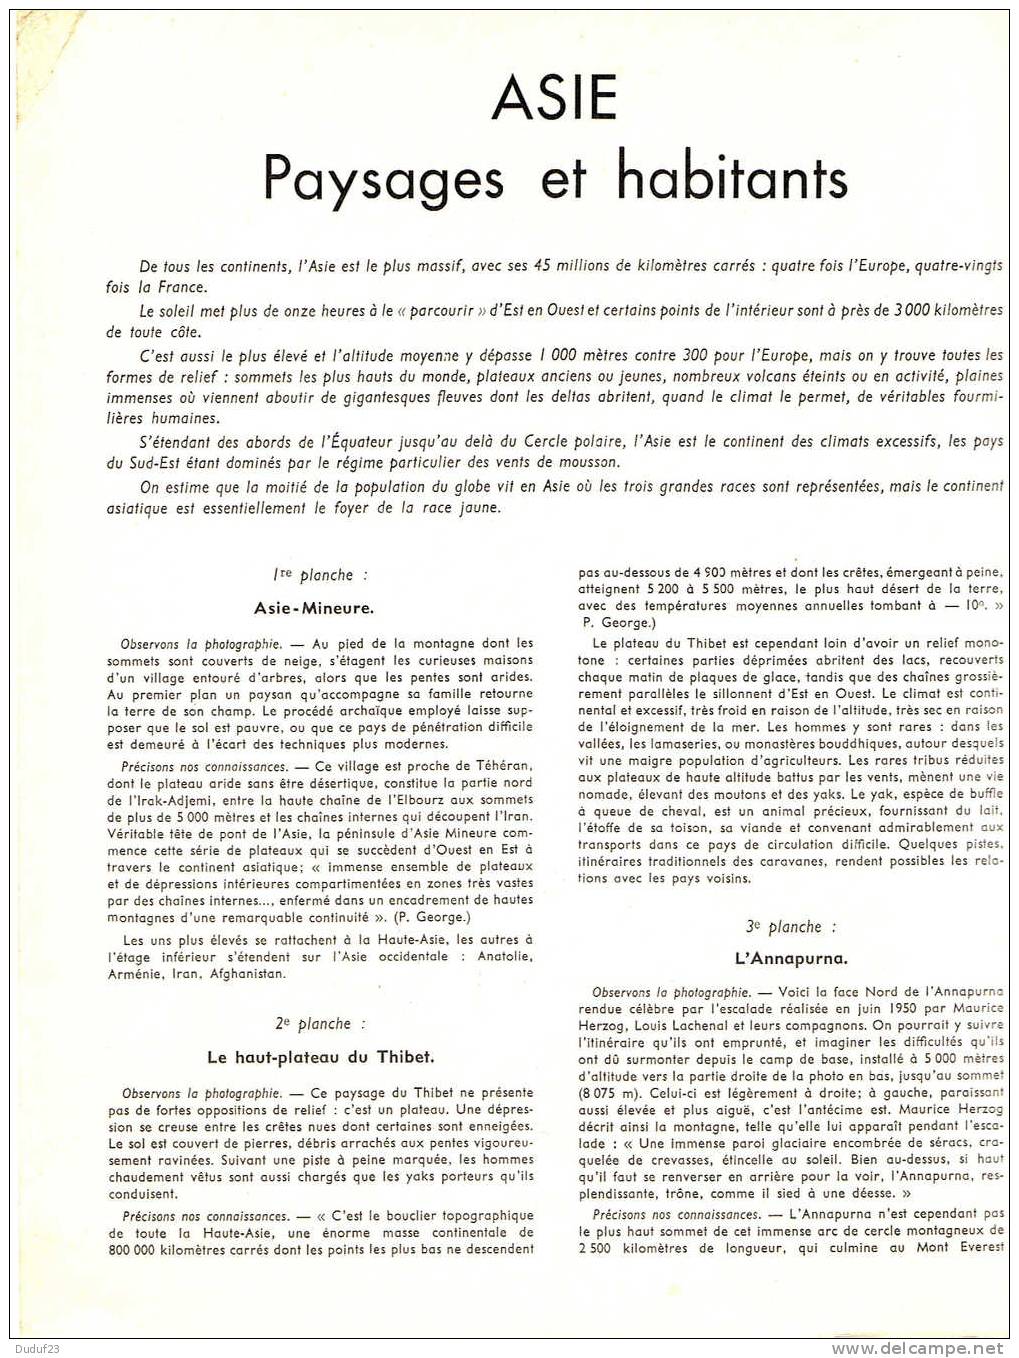 ASIE PAYSAGES ET HABITANTS - DOCUMENTATION PEDAGOGIQUE ROSSIGNOL MONTMORILLON 1957 - Schede Didattiche